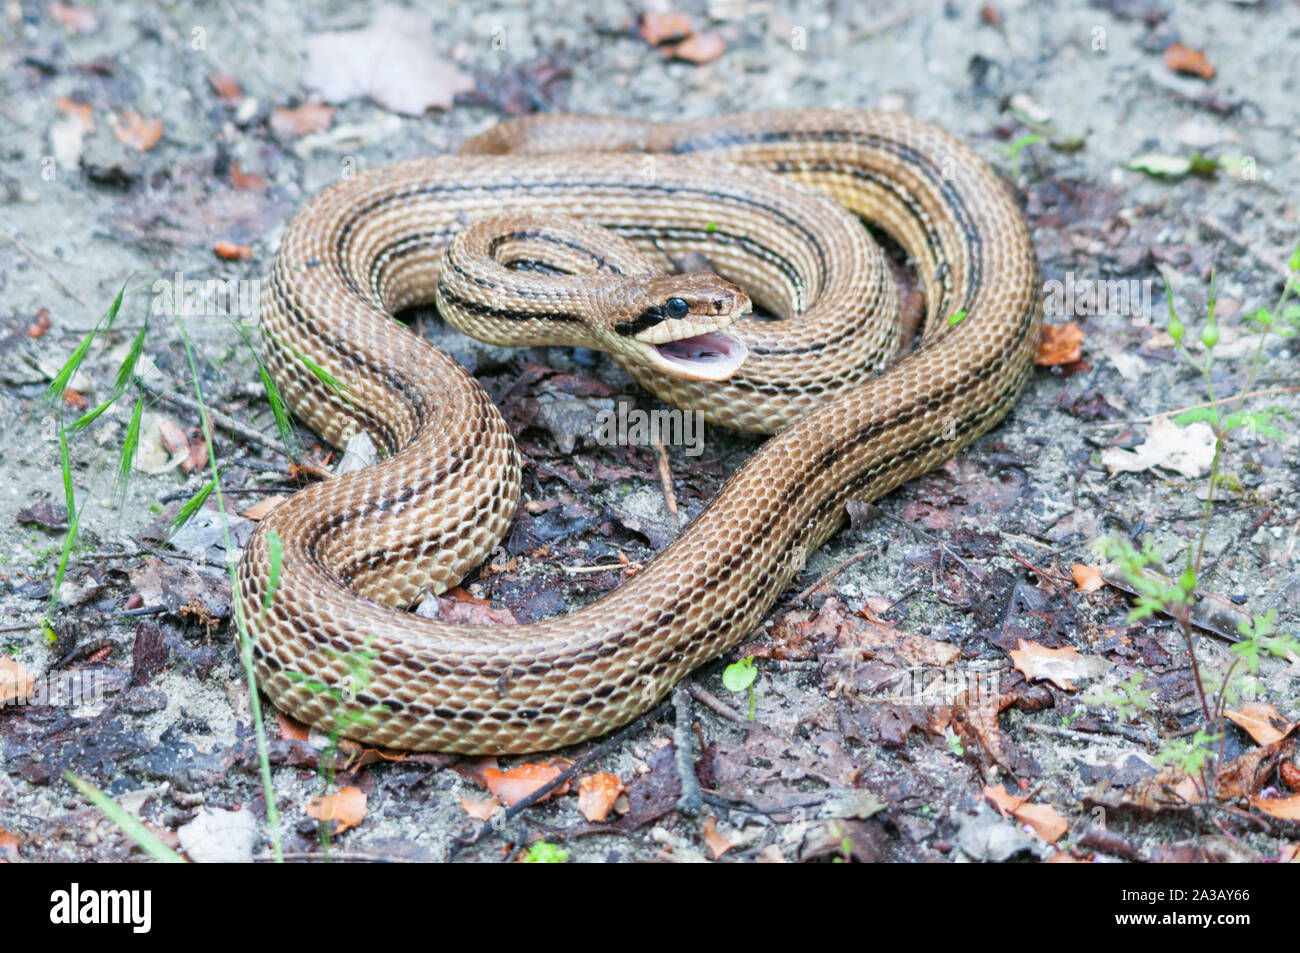 Adult four-lined snake (Elaphe quatuorlineata) hissing Stock Photo